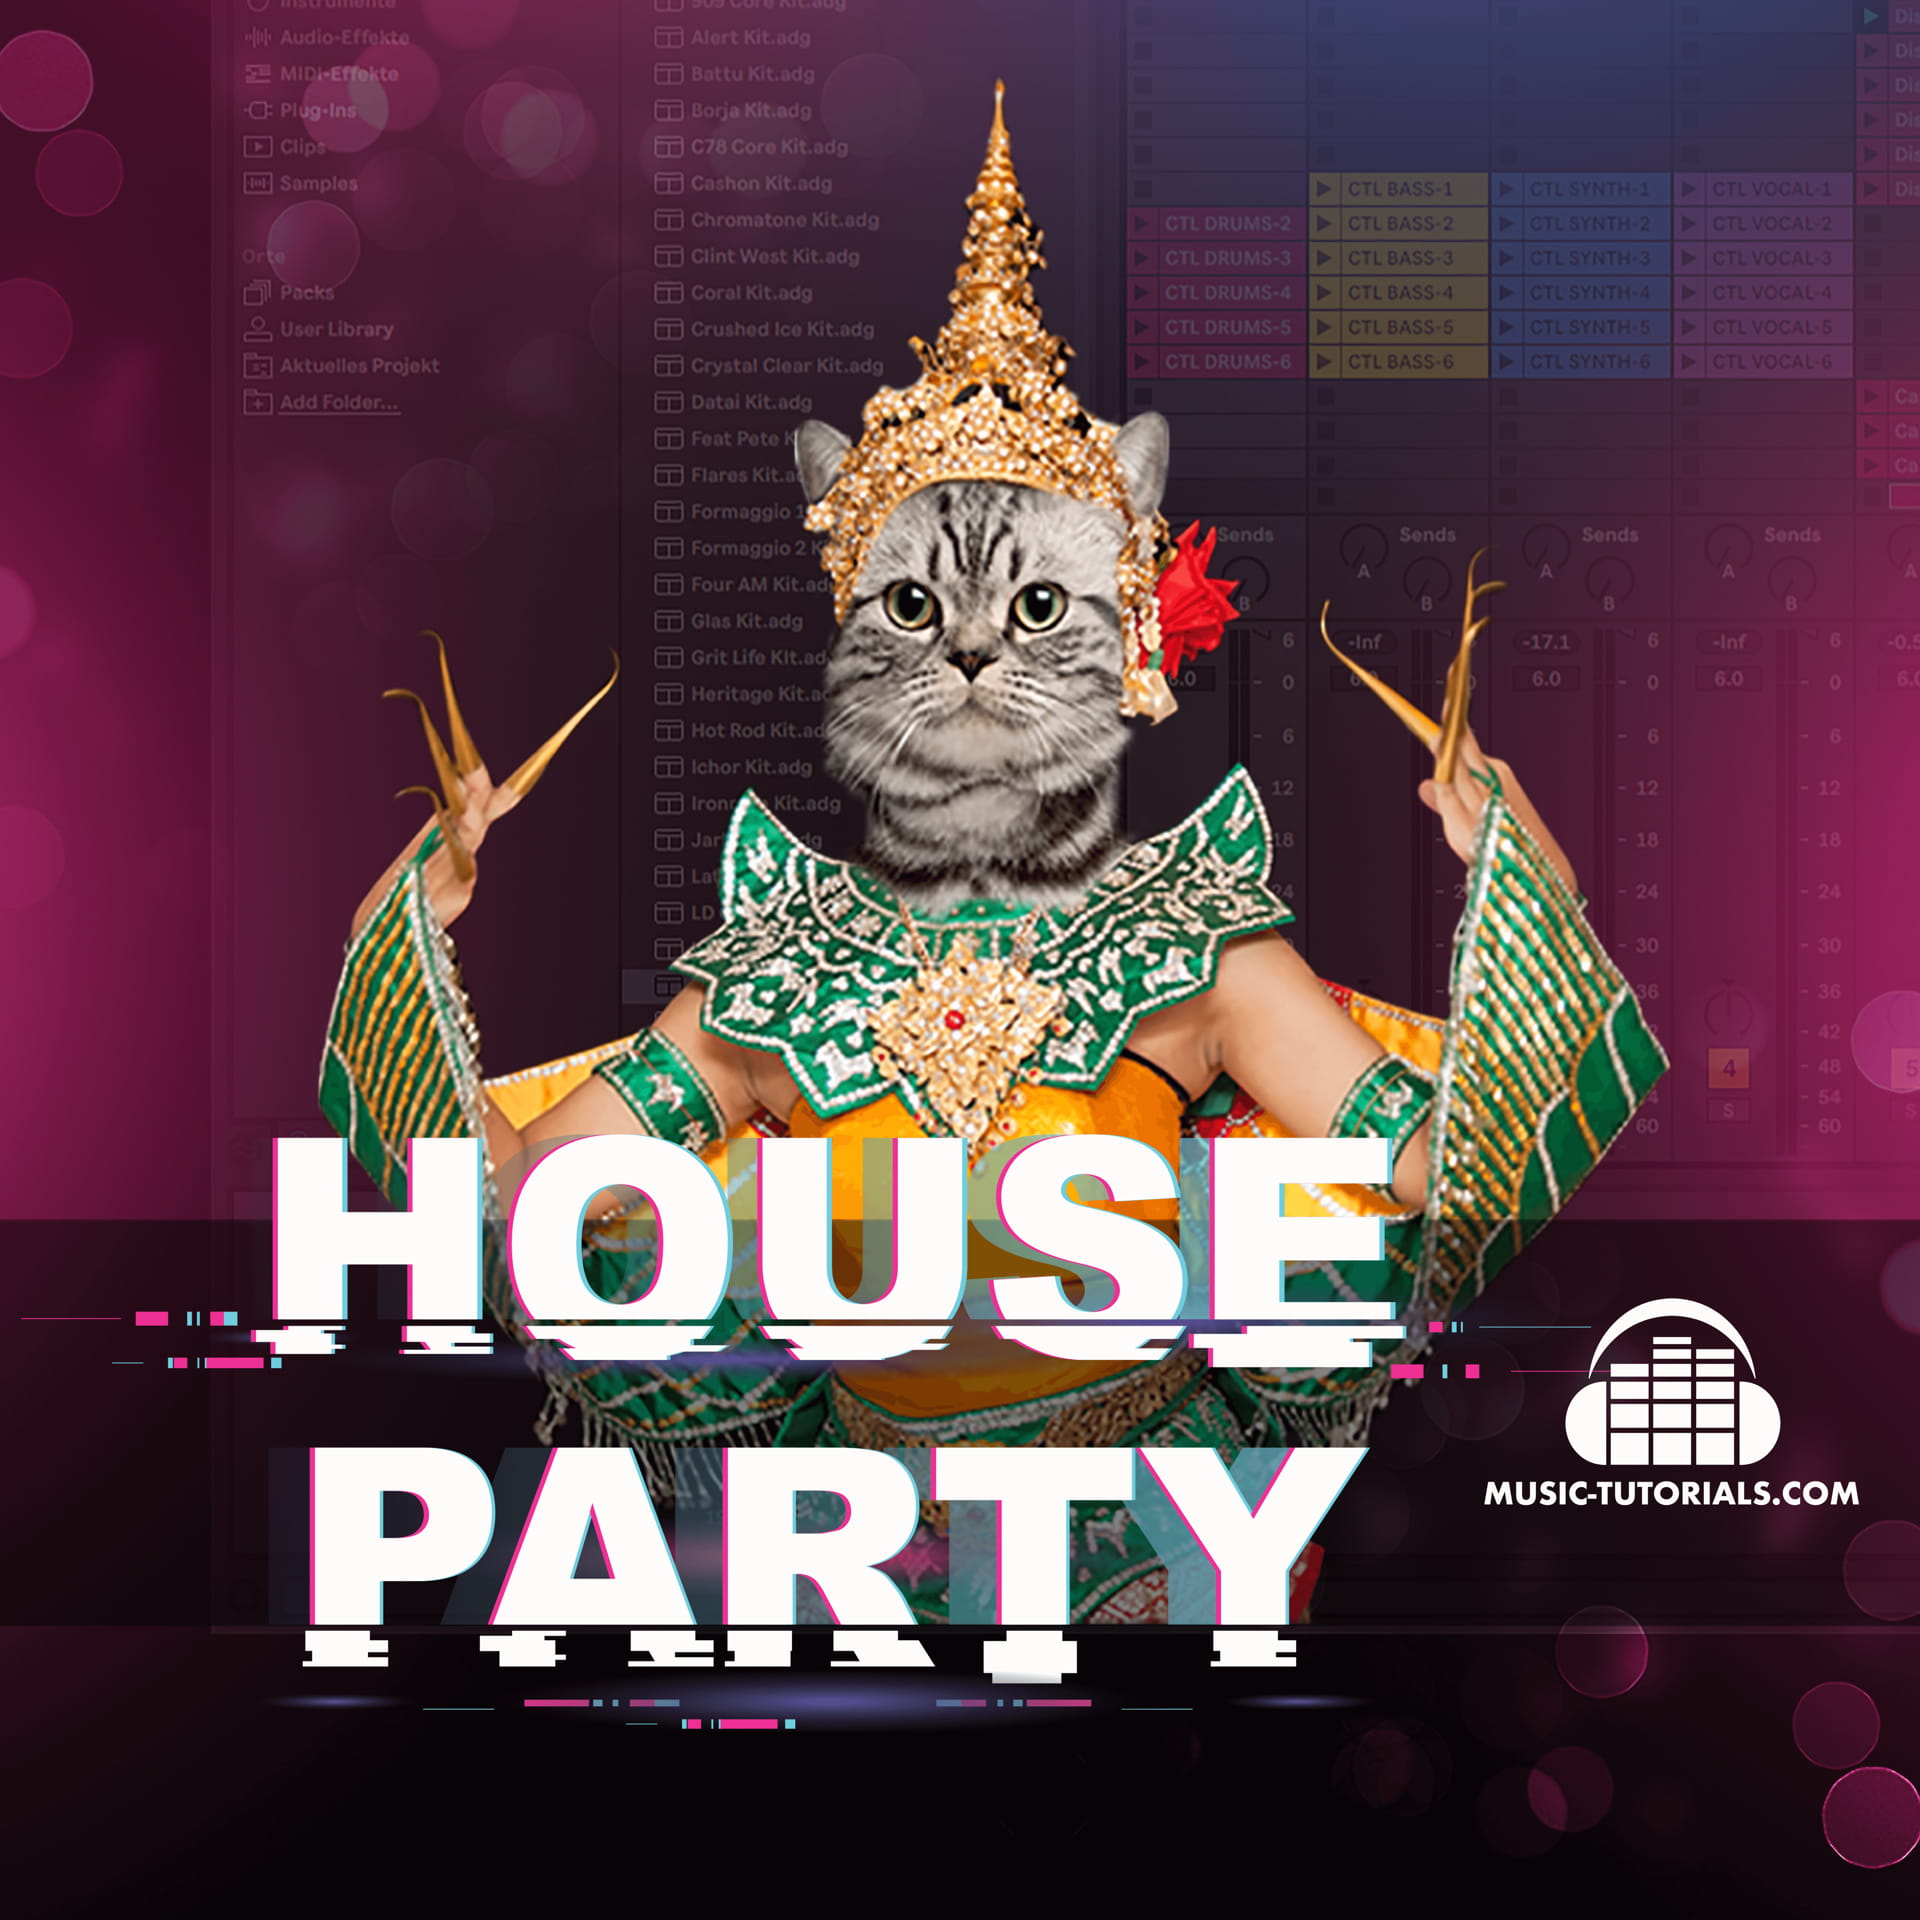 House-Party Premium Producer Kurs | Music-Tutorials.com